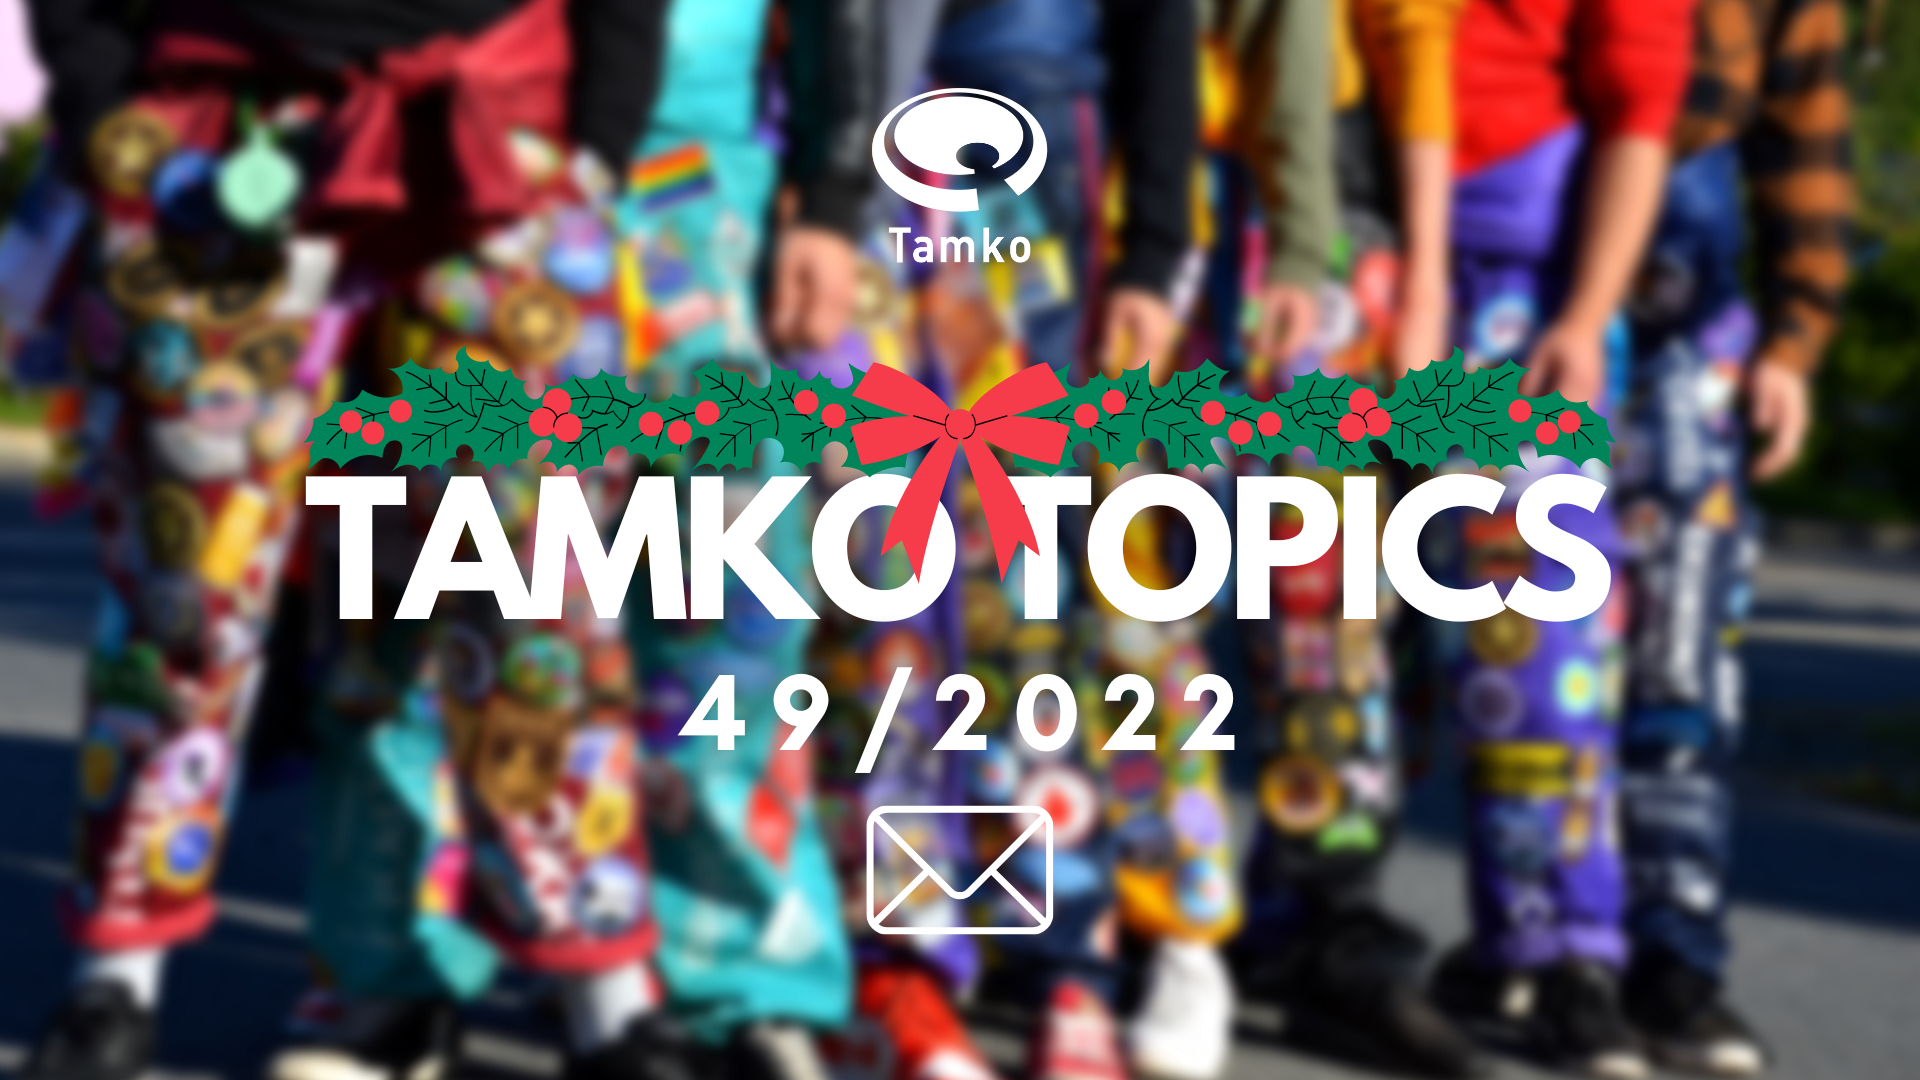 TAMKO TOPICS 49/2022